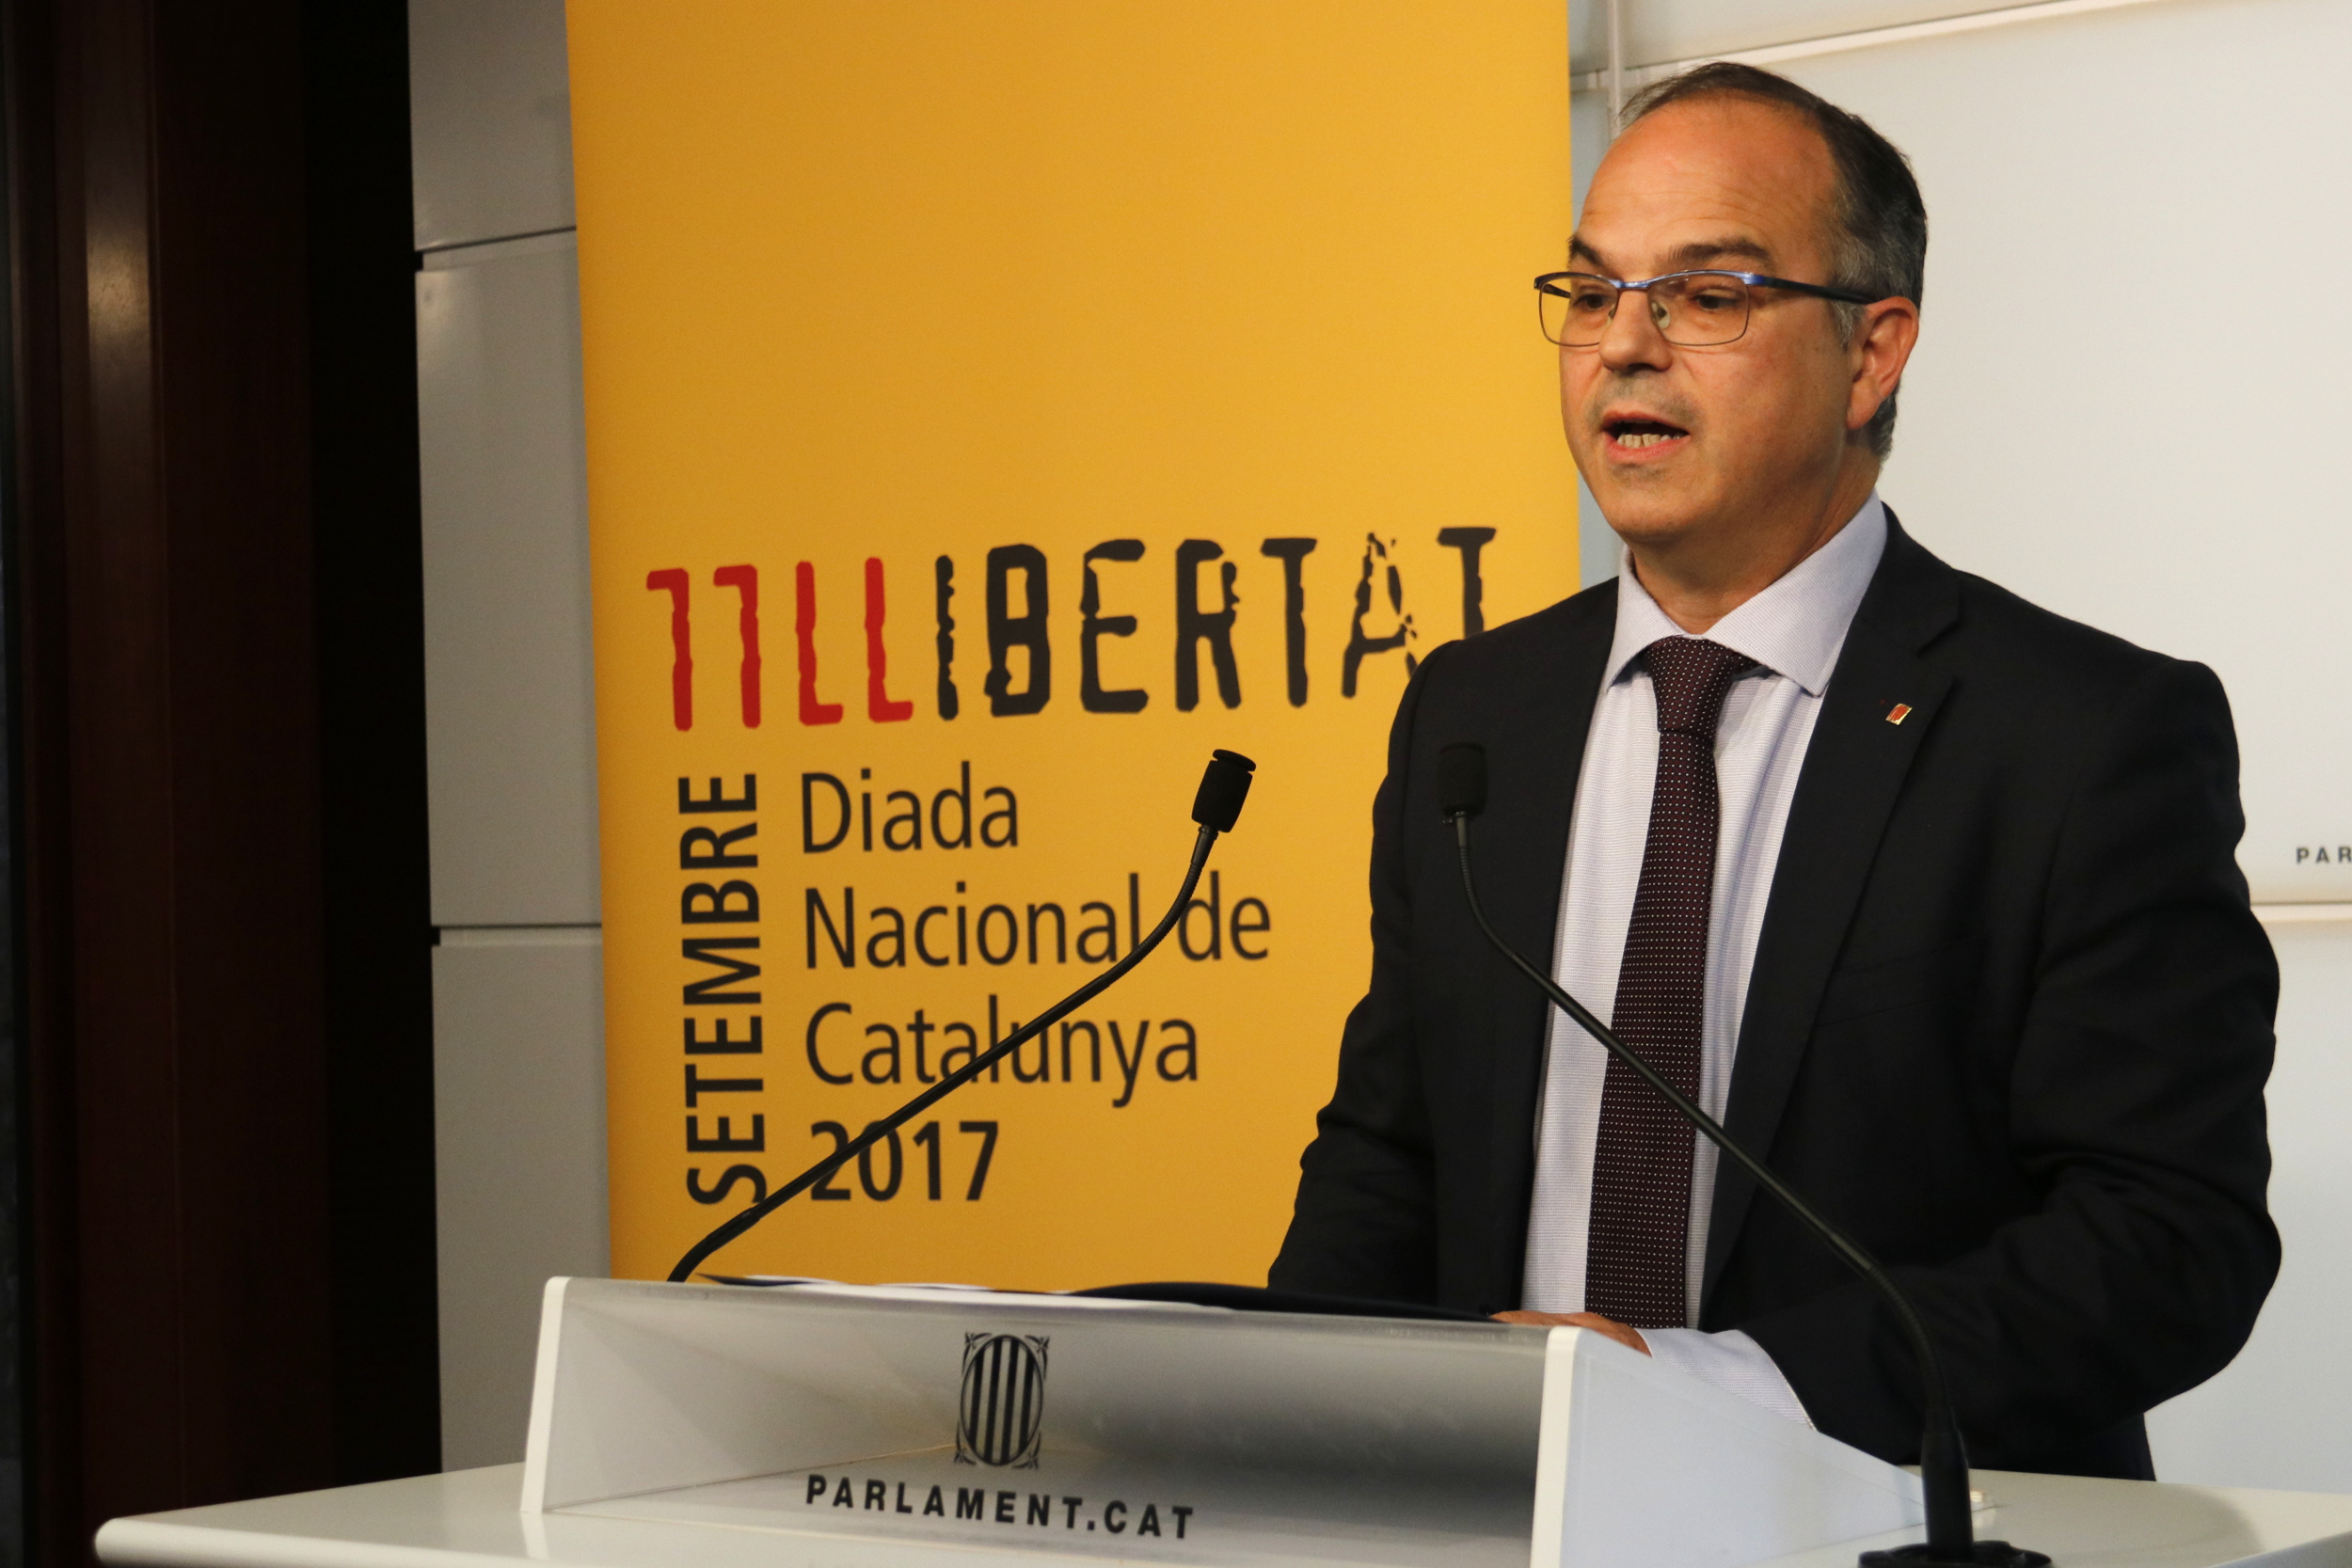 Catalan government spokesperson Jordi Turull (by ACN)